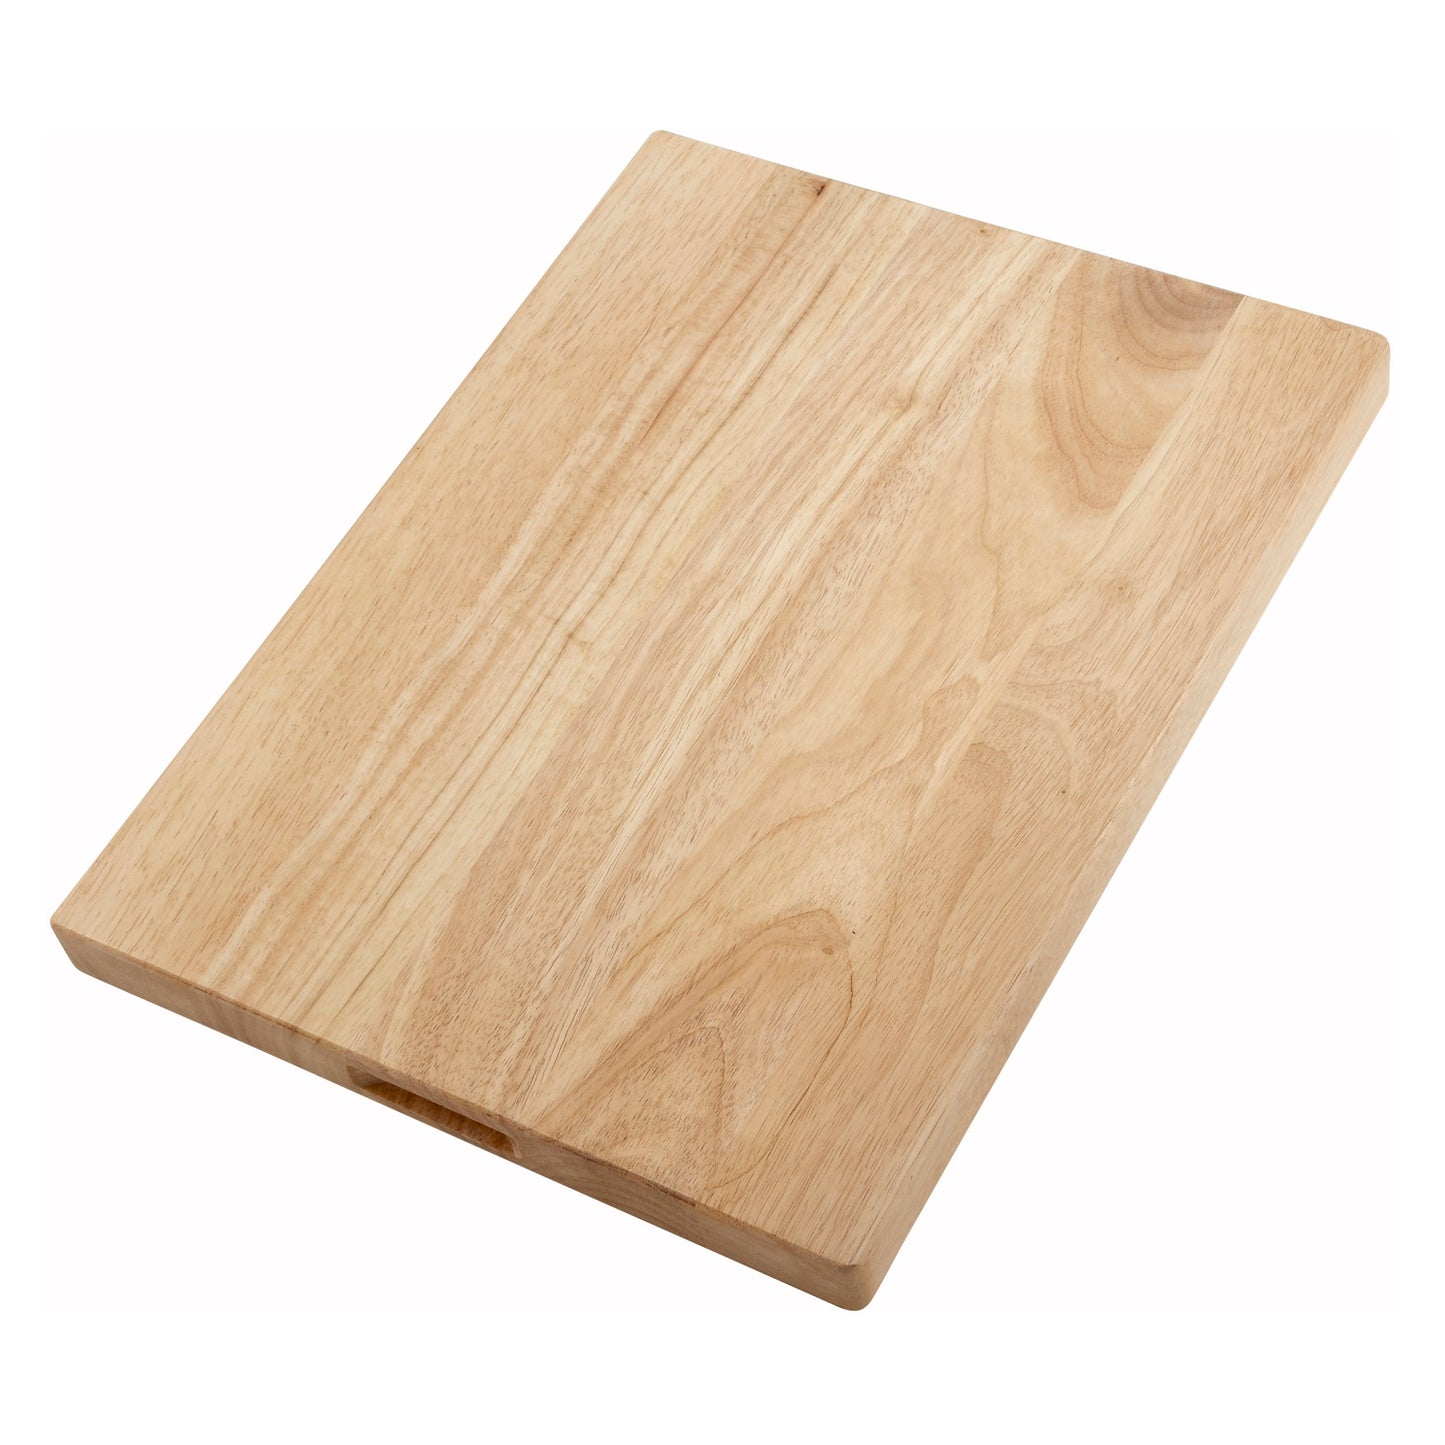 WCB-1824 - Wooden Cutting Boards - 18 x 24